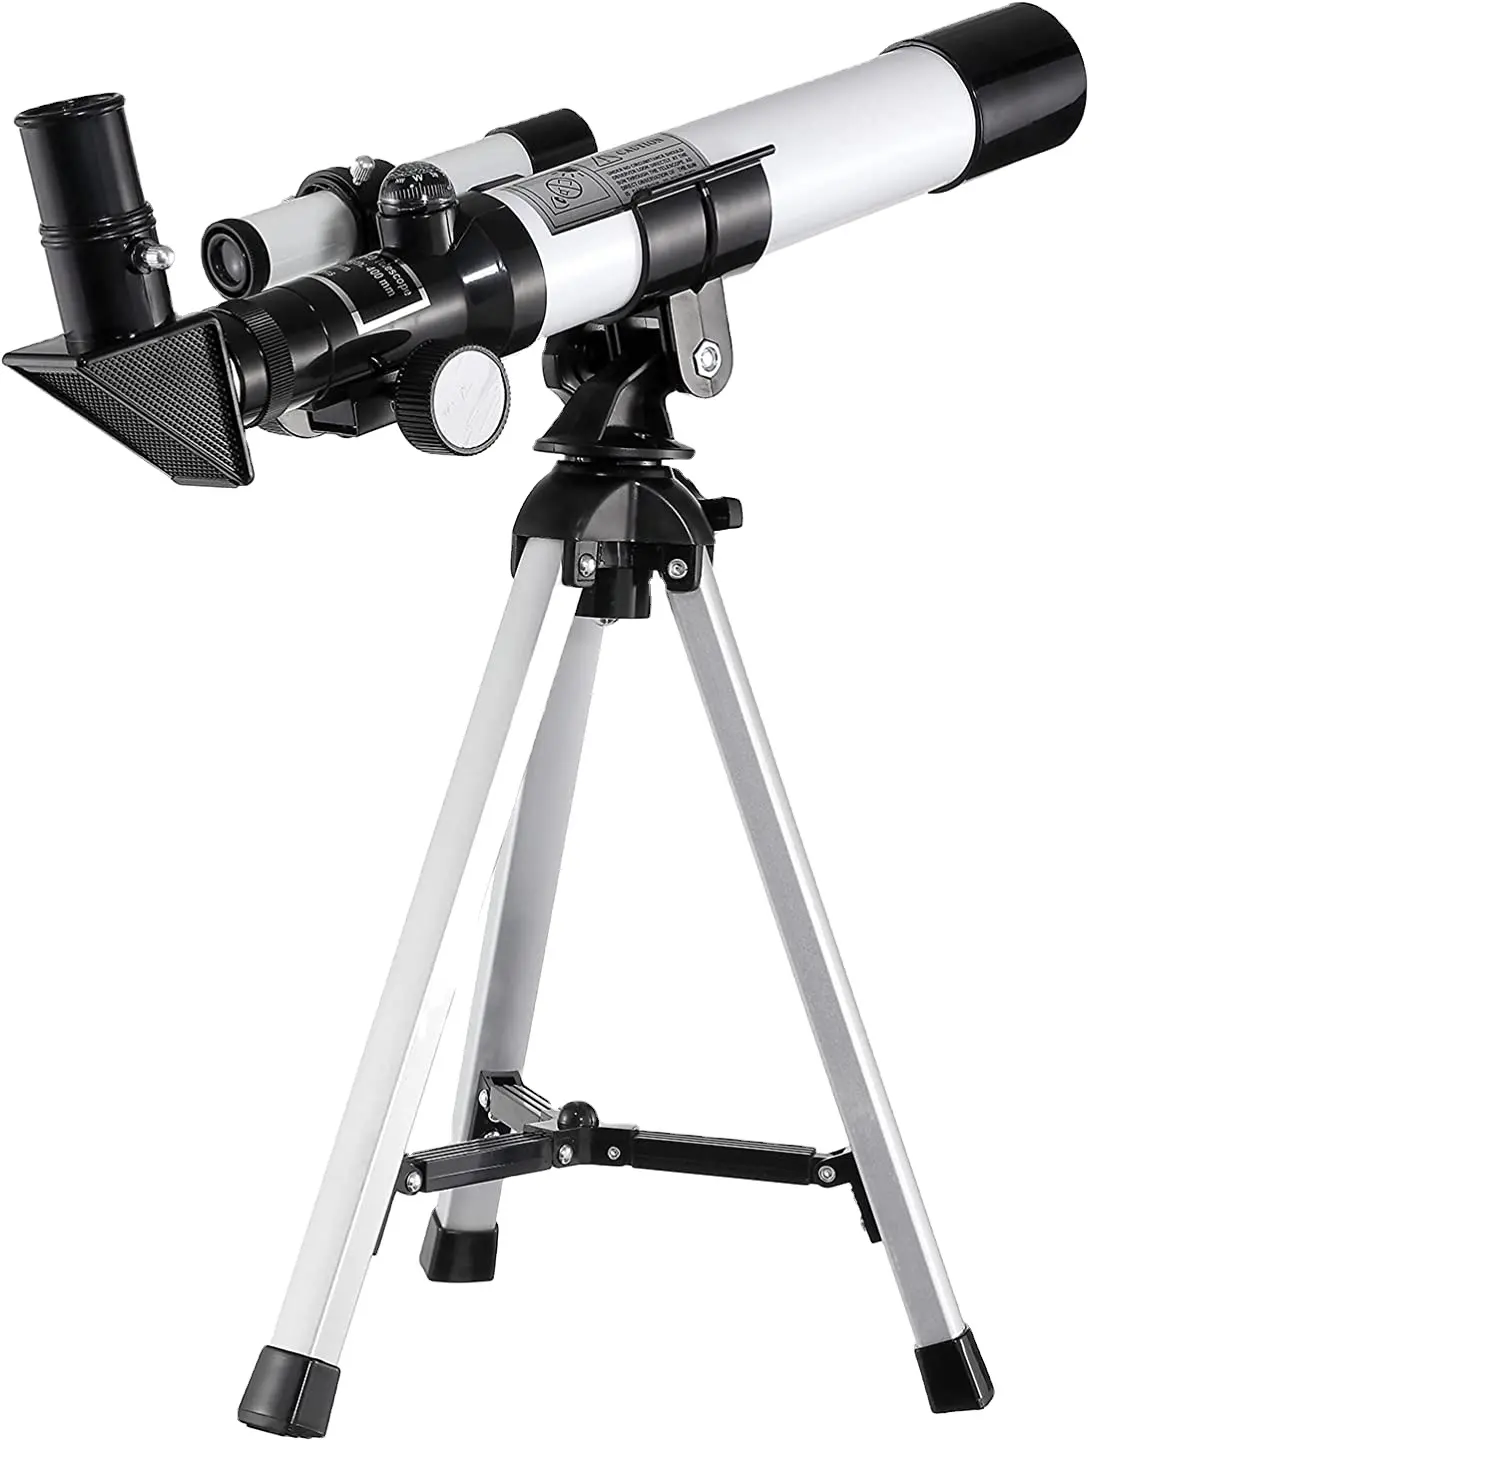 F40400 Telescope Astronomy Children Beginners Hourly Binoculars 400 x 40 mm HD Telescope Profile Telescope for Moon, Planets